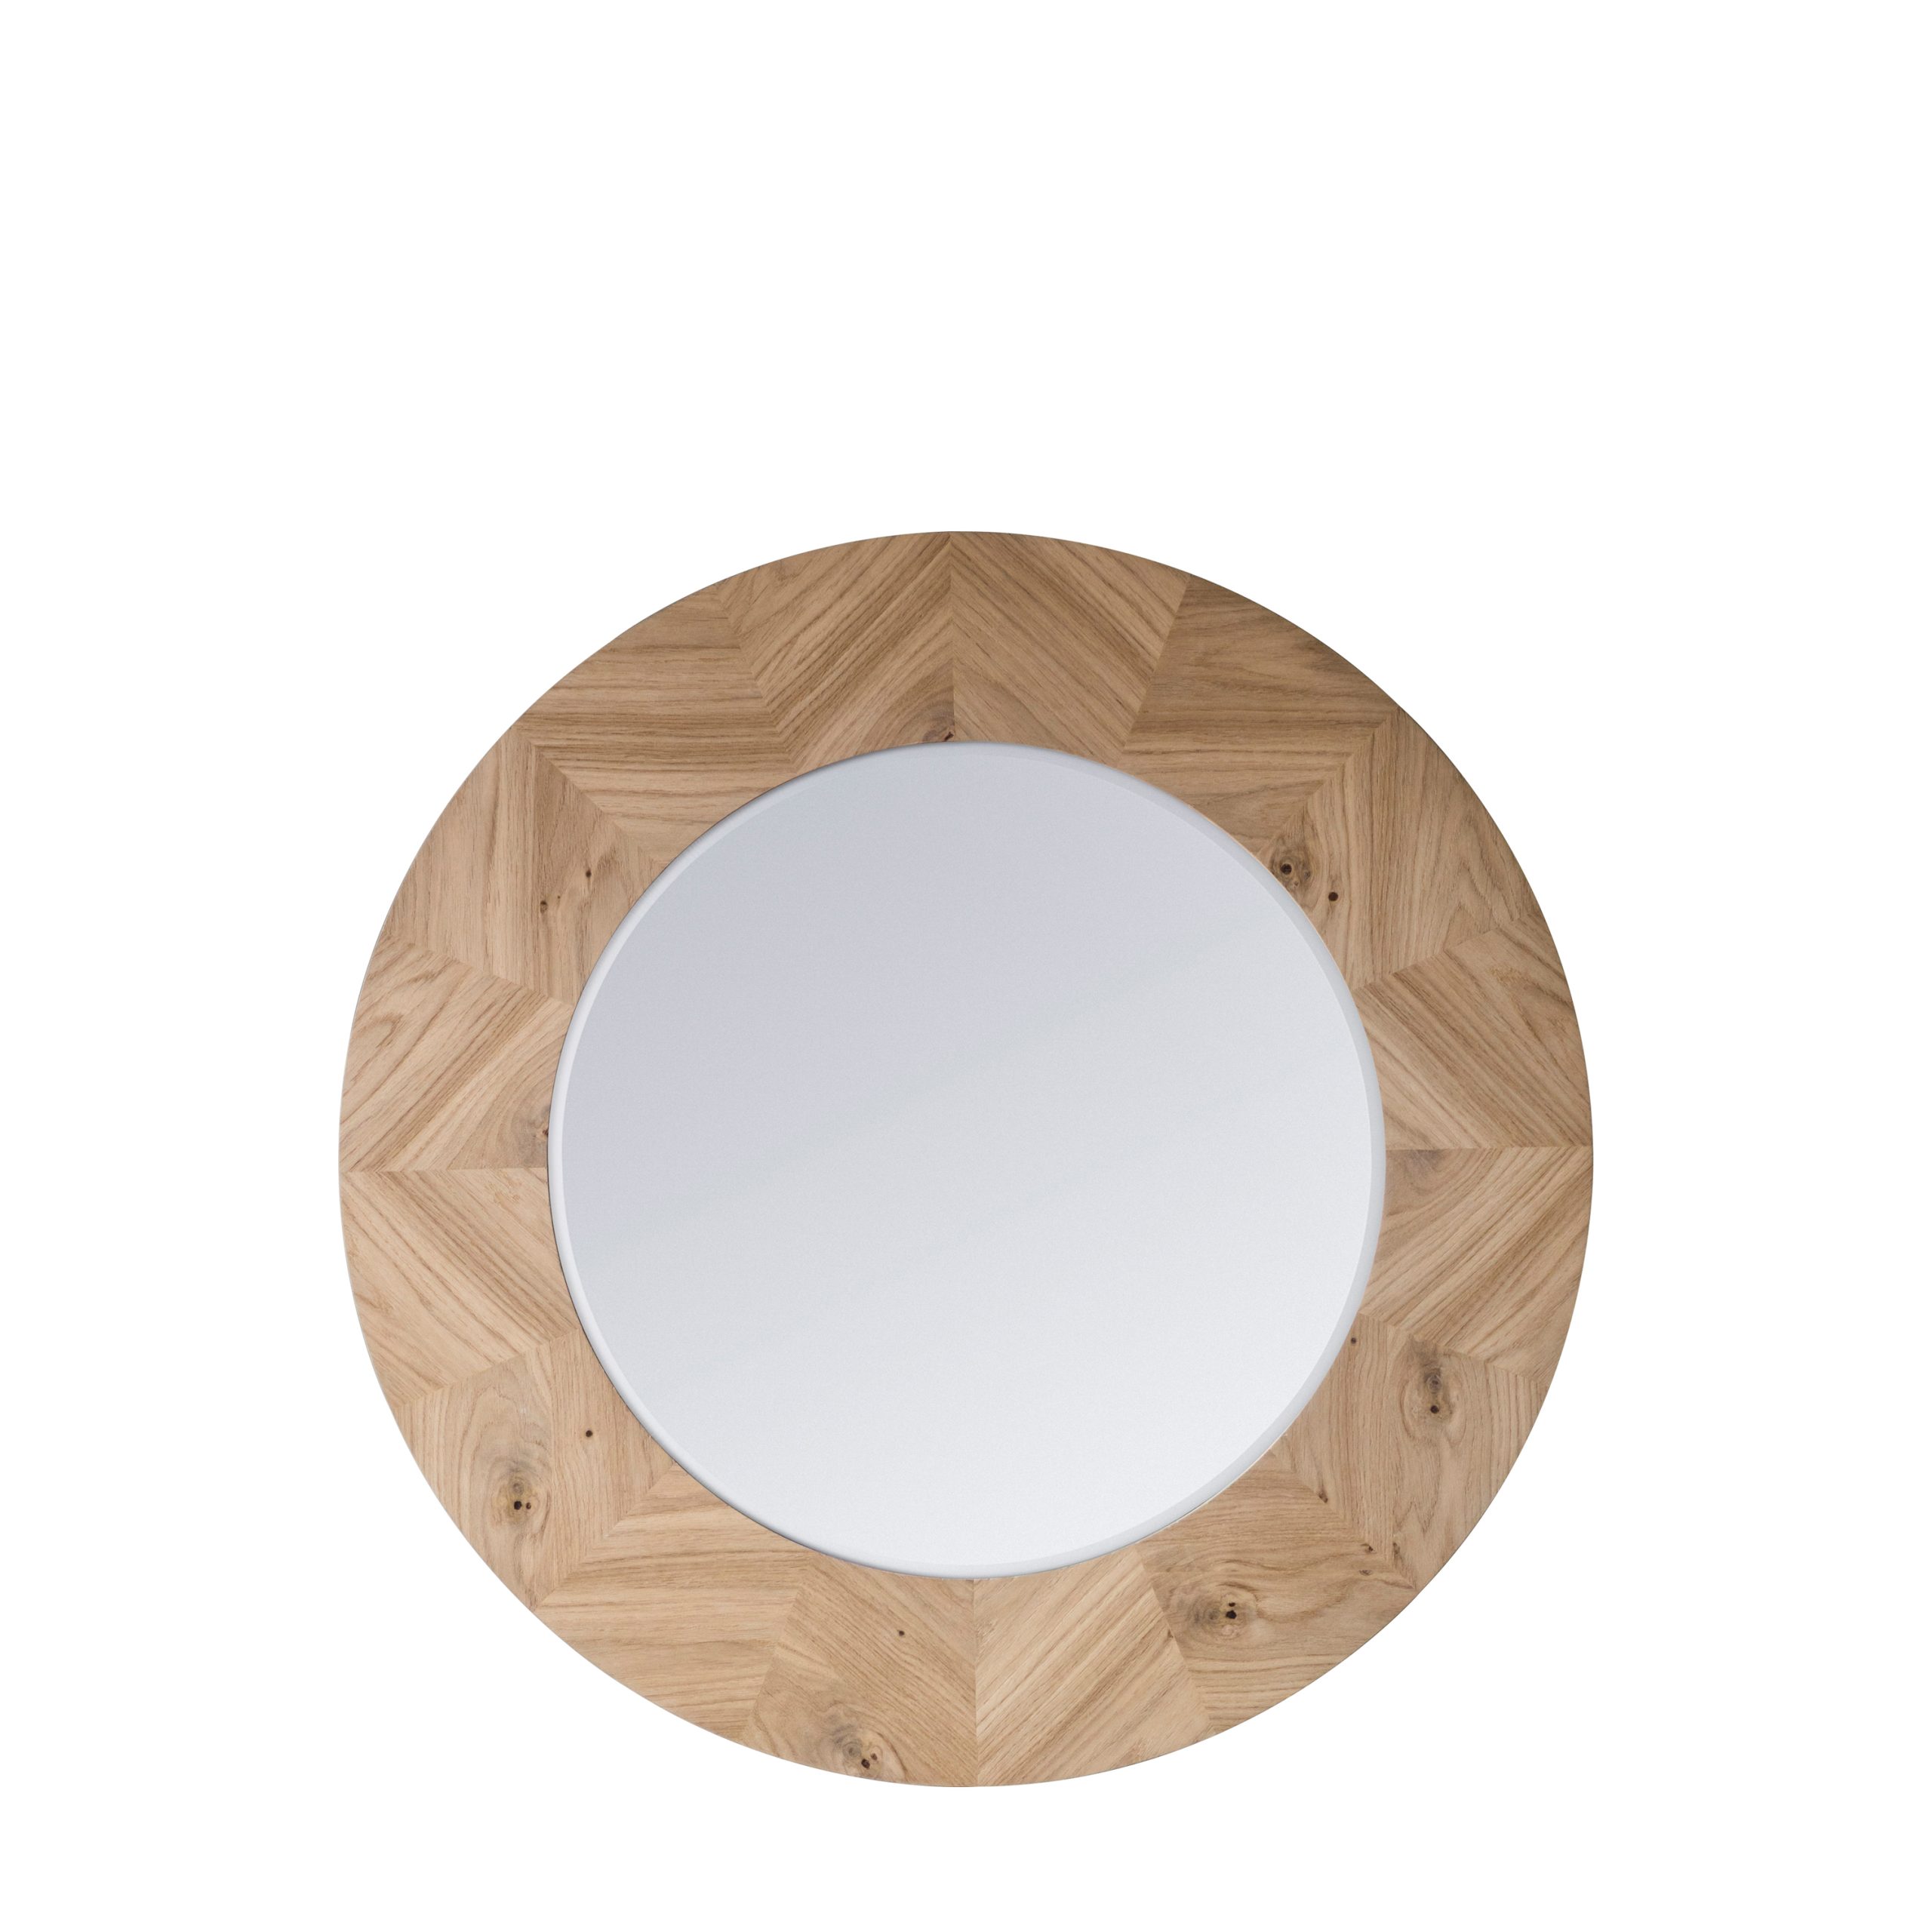 Gallery Direct Milano Round Mirror